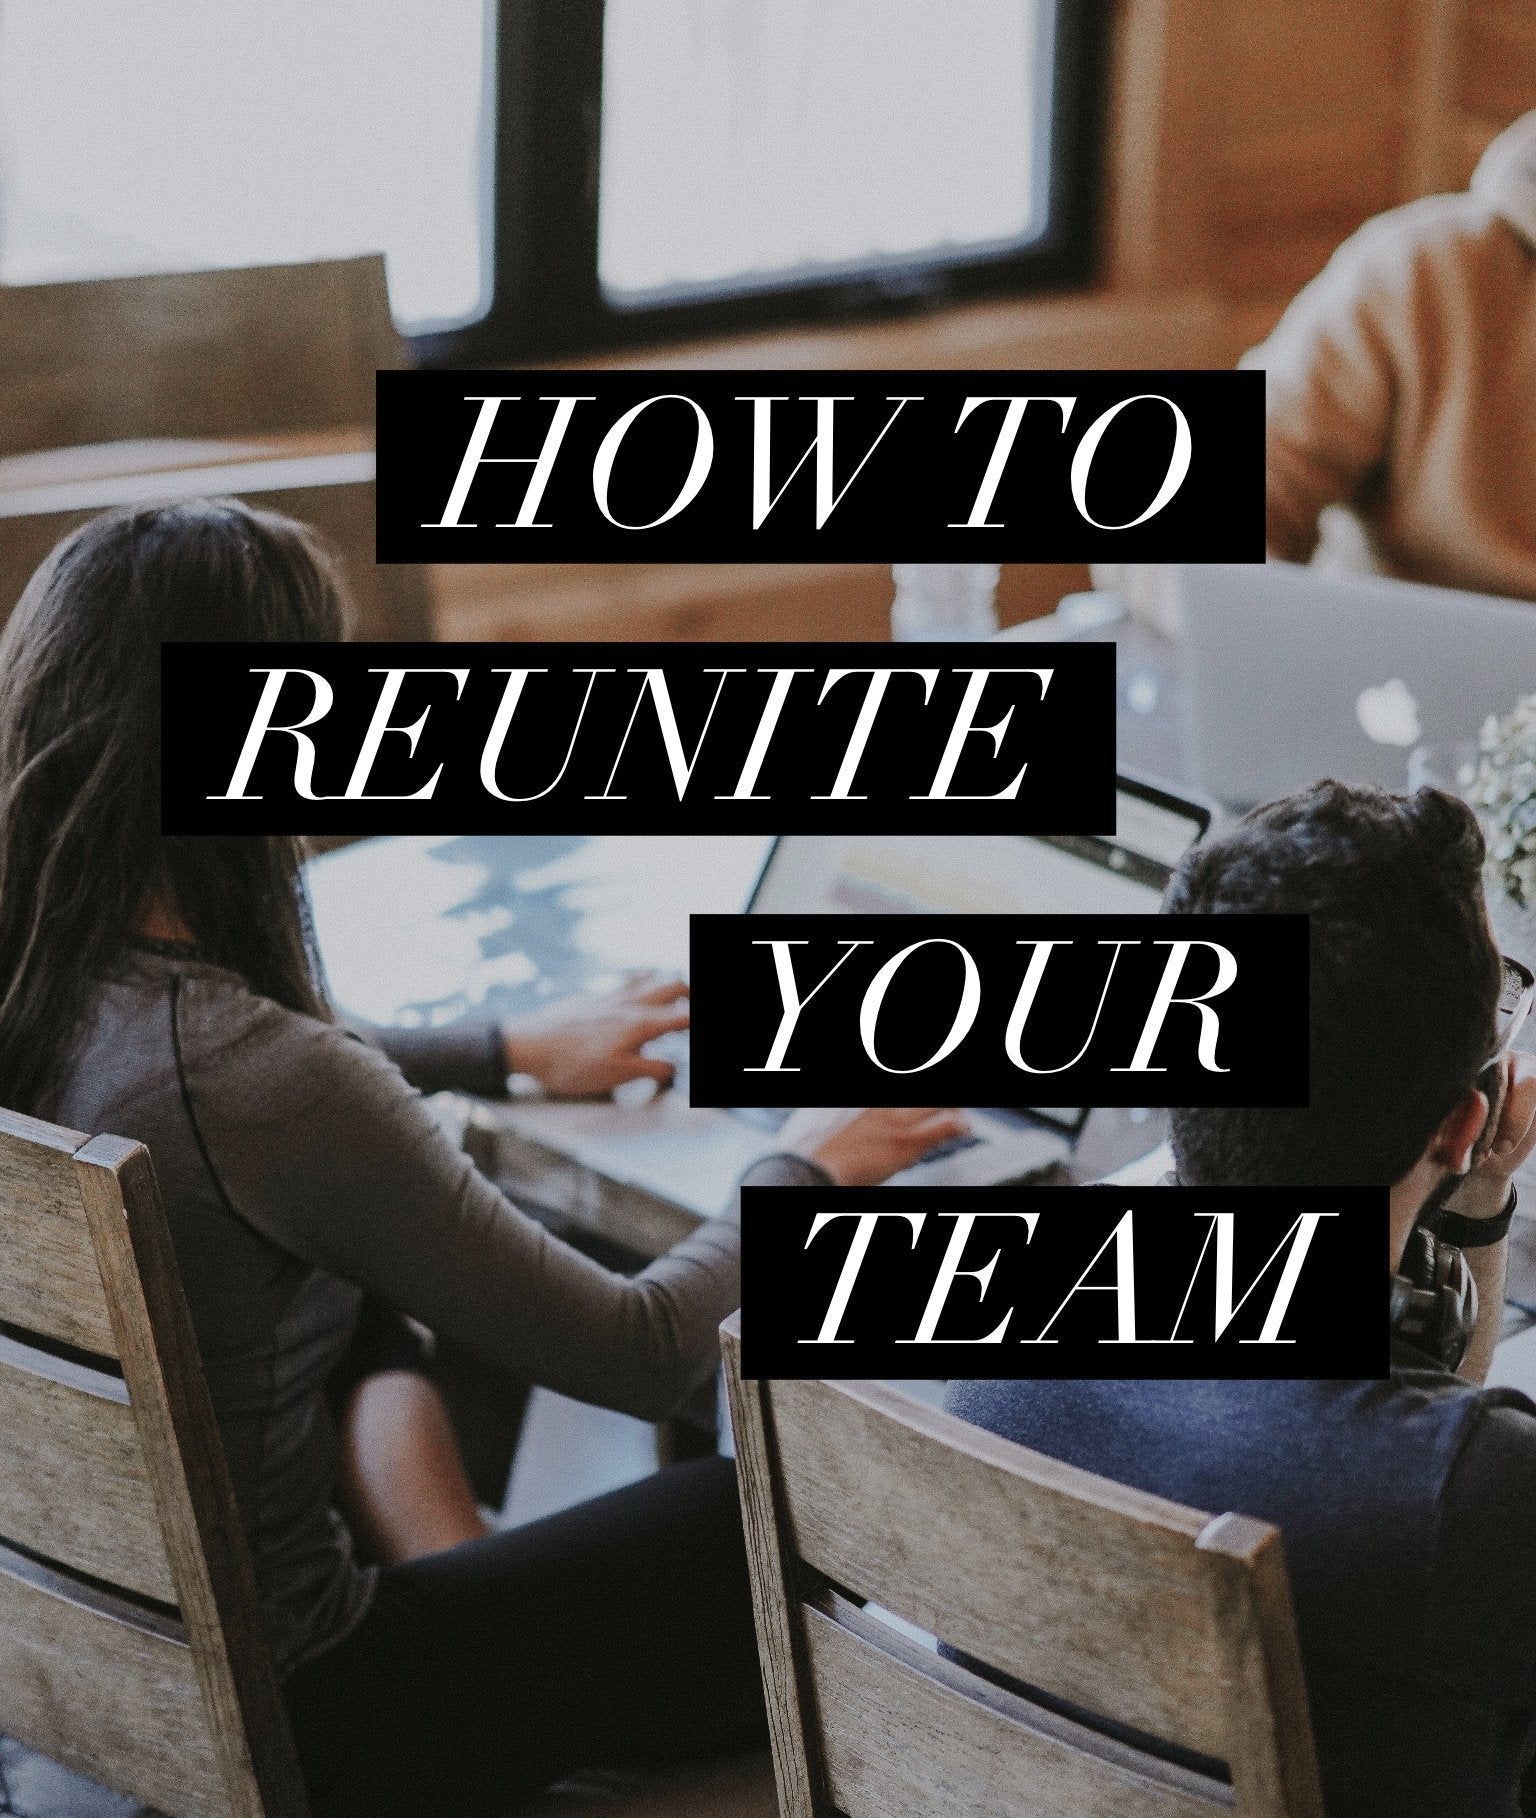 How to reunite your team | Social Stories Club